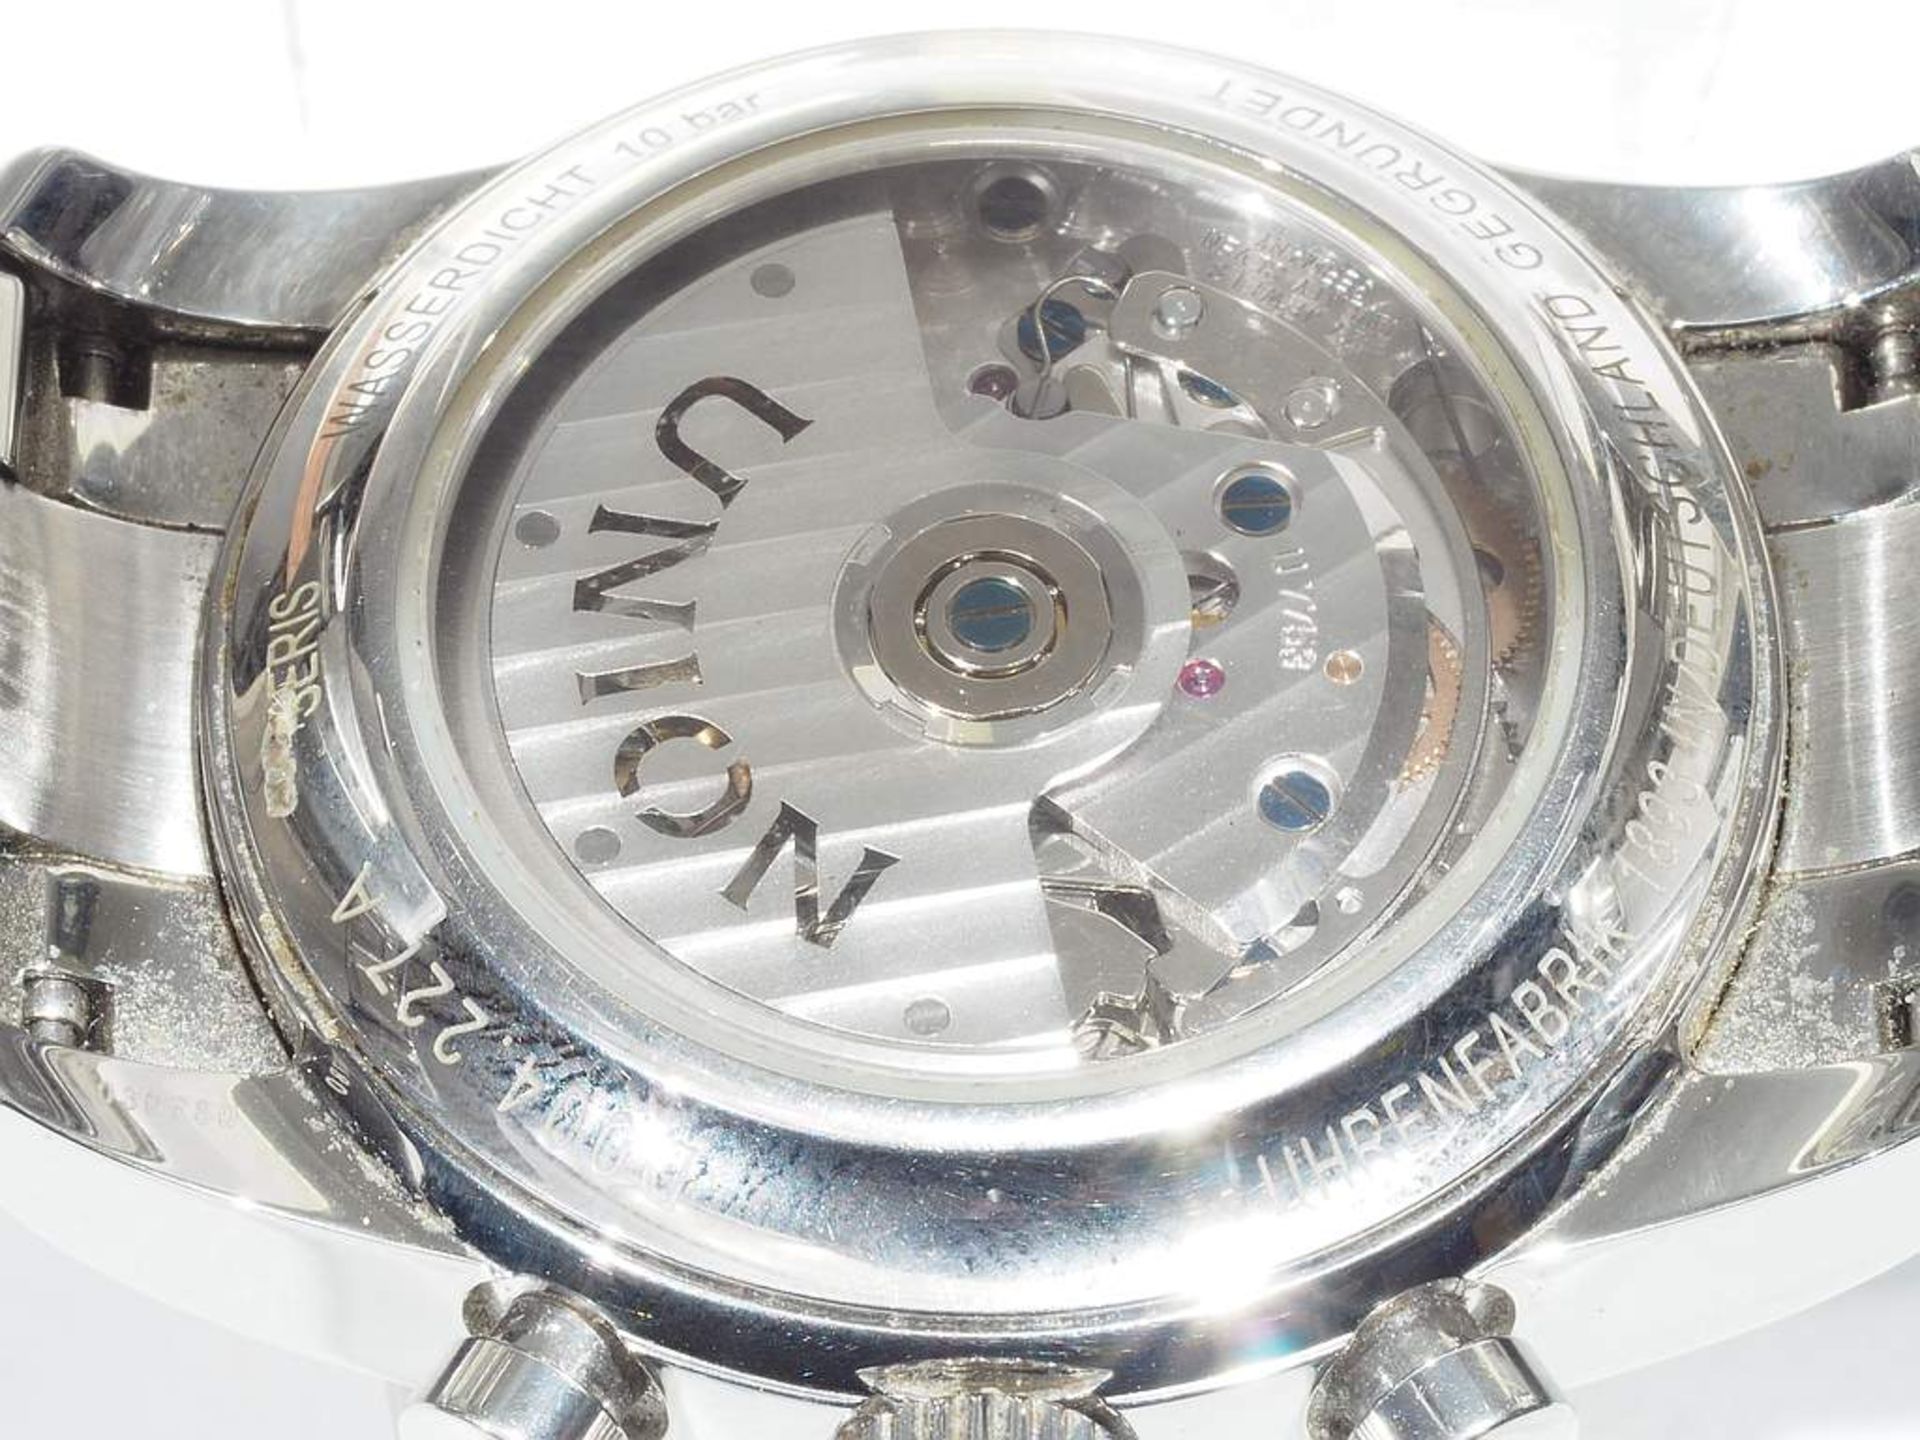 Herren-Armbanduhr Chronograph UNION GLASHÜTTE aus der Kollektion Seris. Gehäuse Nummer D004.227 - Image 6 of 8